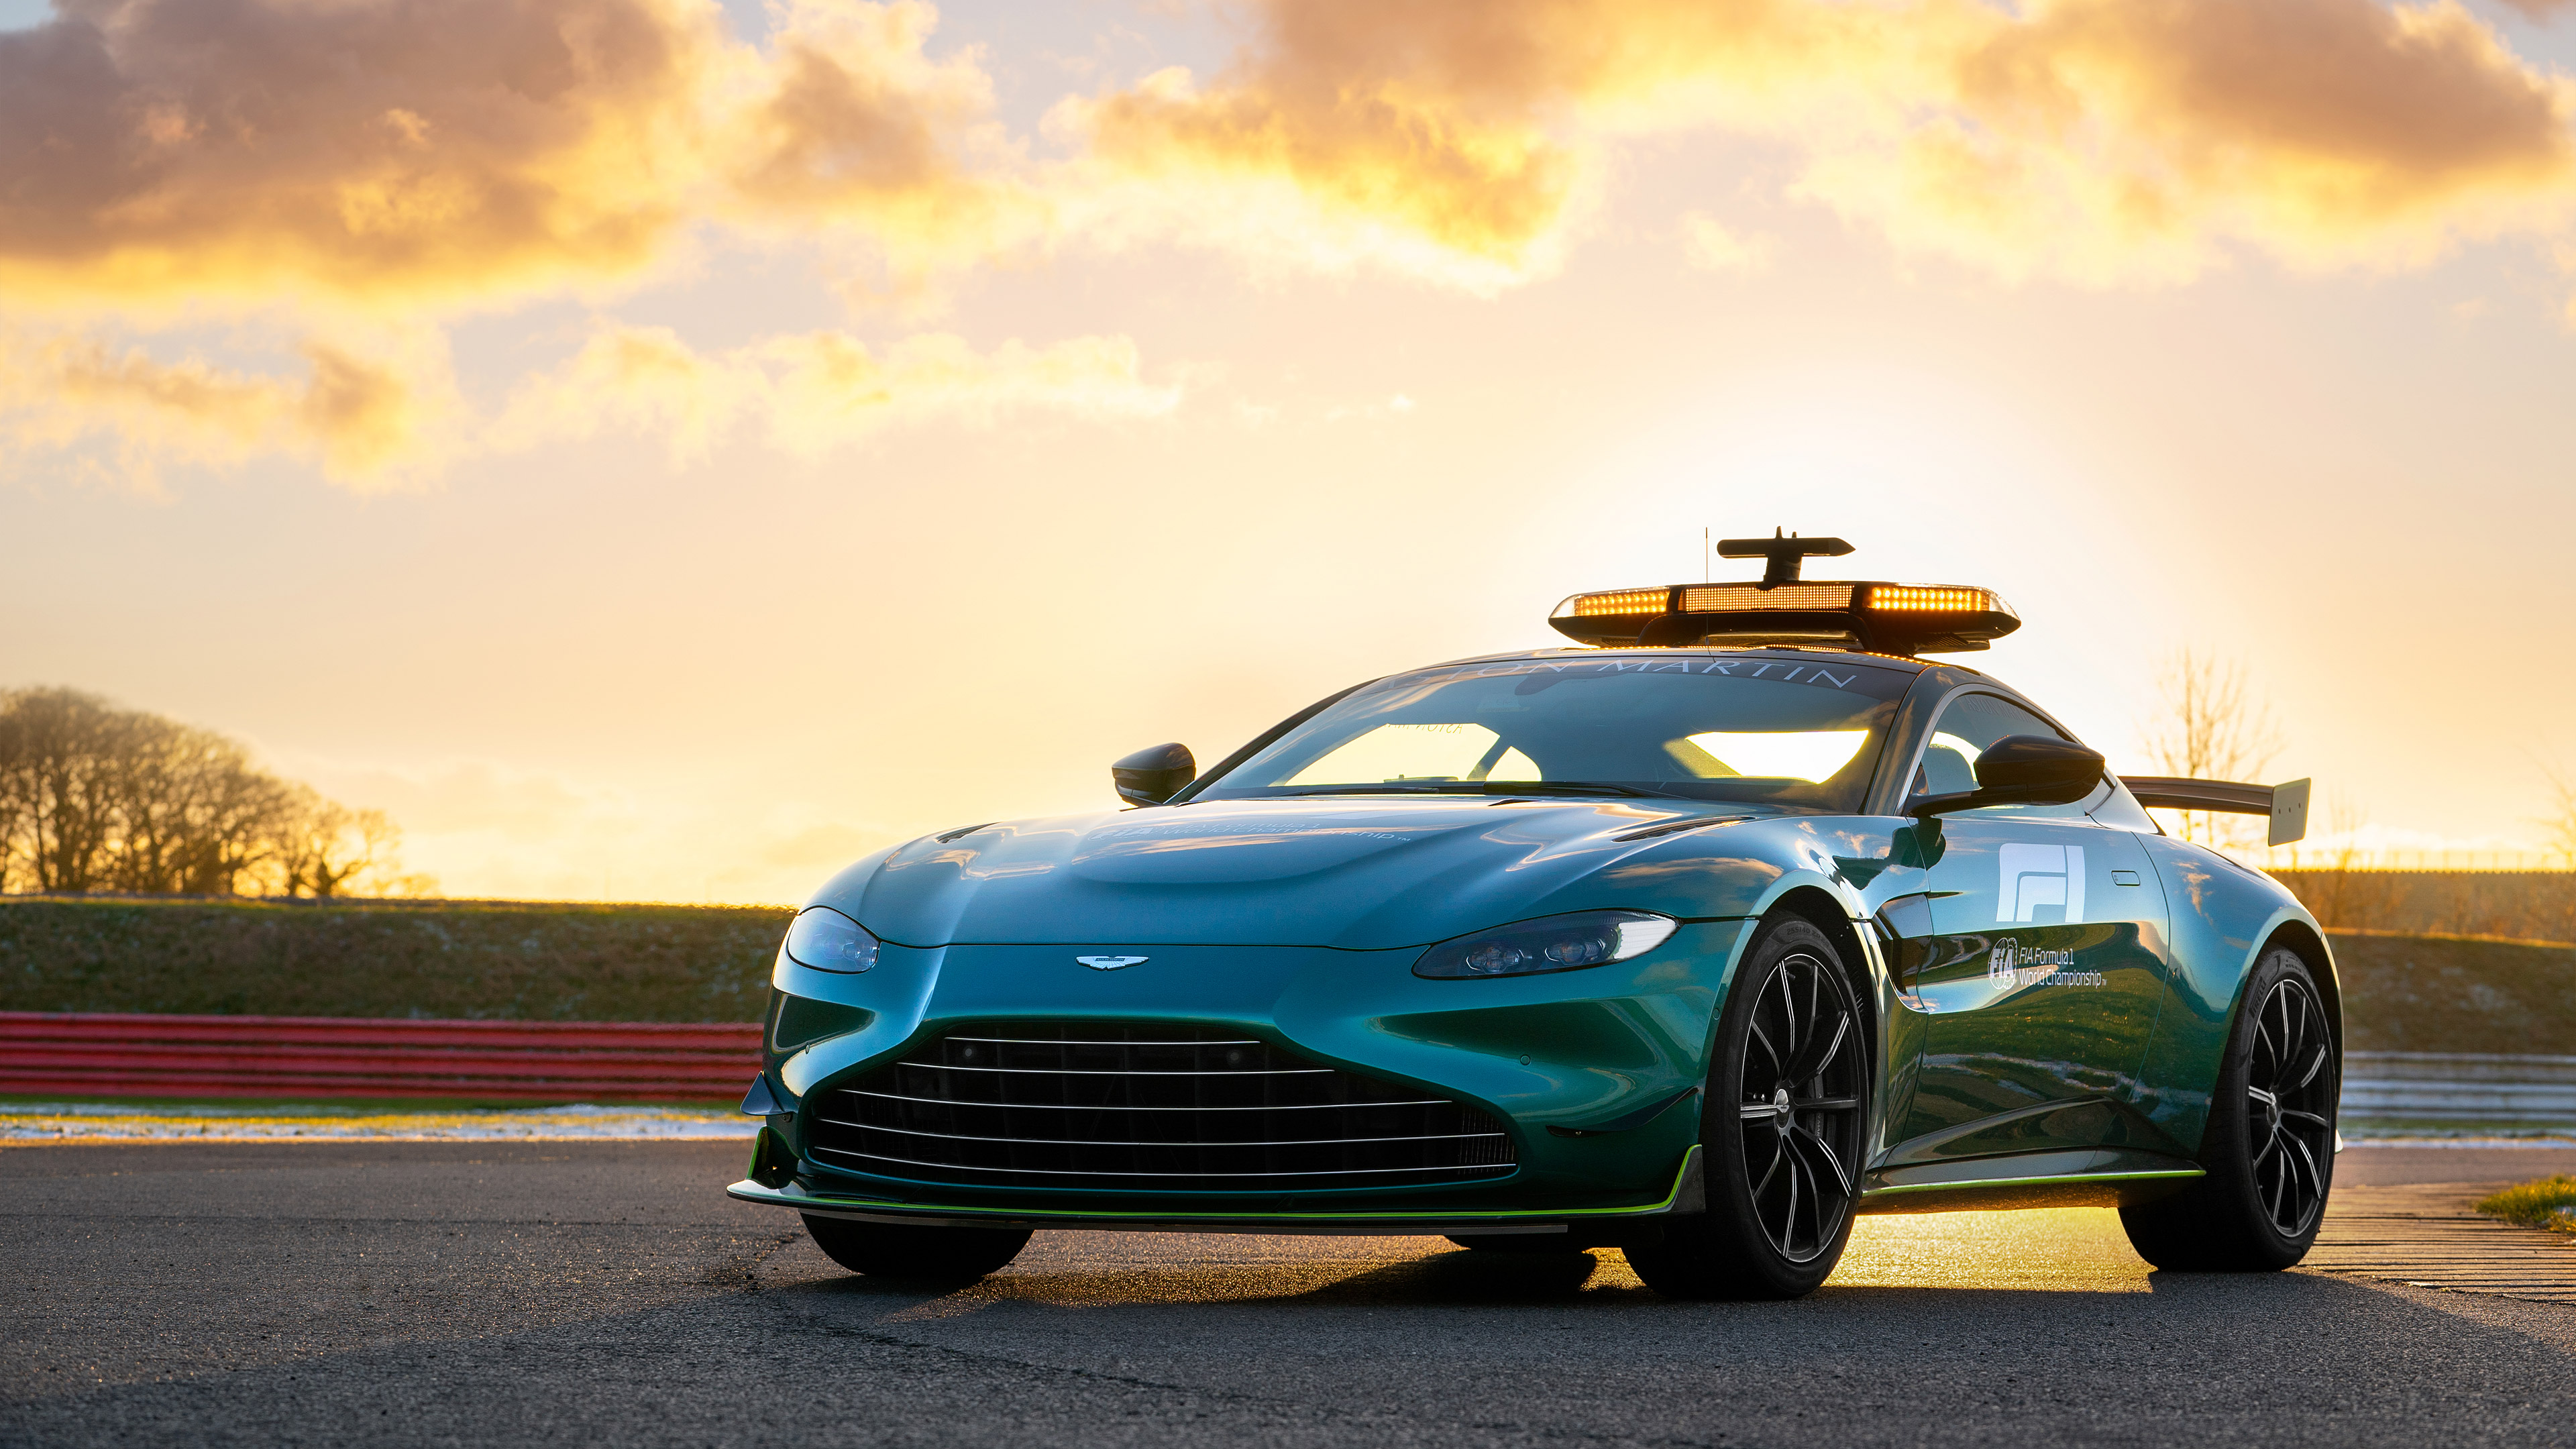 2021 Aston Martin Vantage F1 Safety Car 4k Ultra Hd Wallpaper Background Image 3840x2160